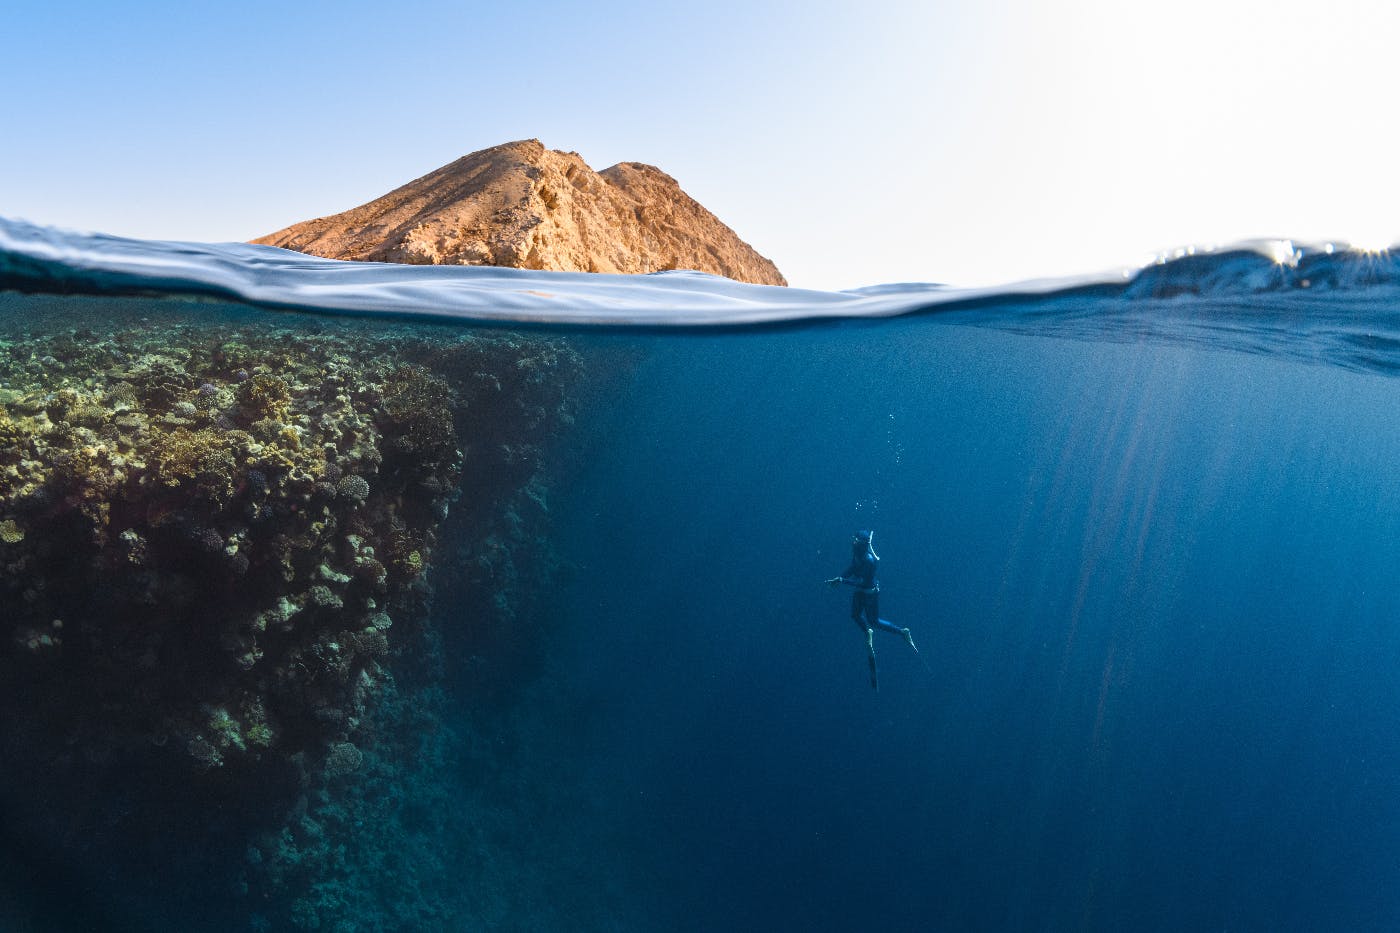 A diver in the ocean near a reef